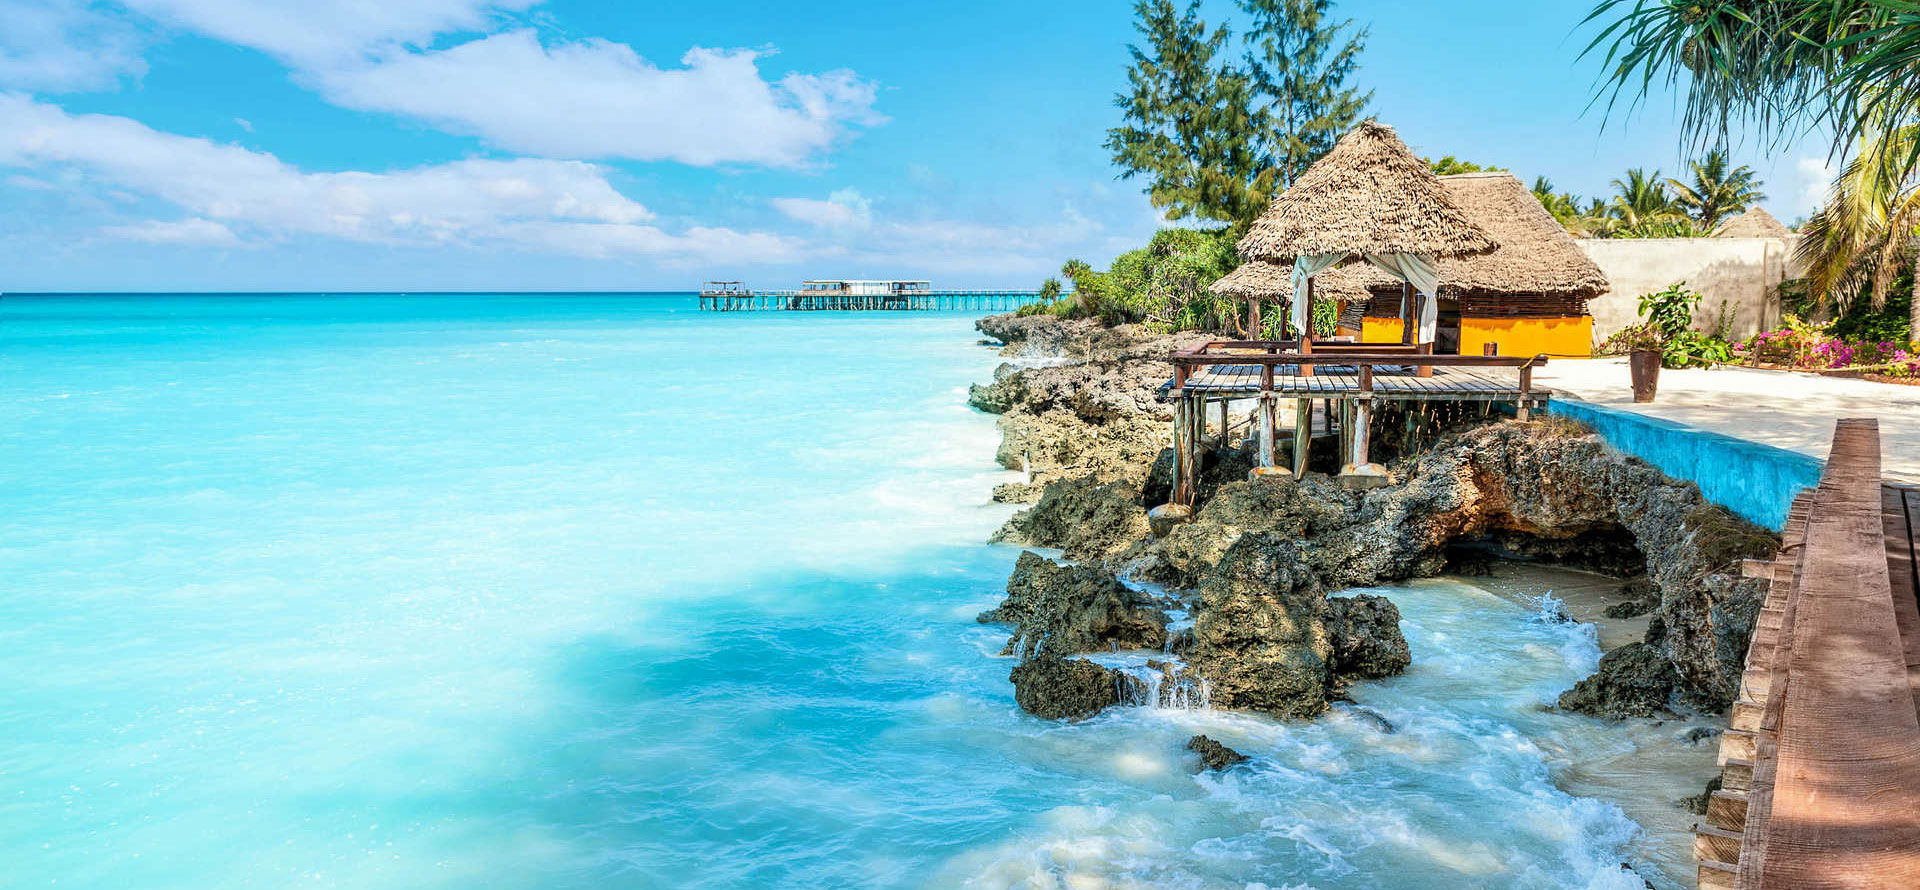 Resort in Zanzibar.